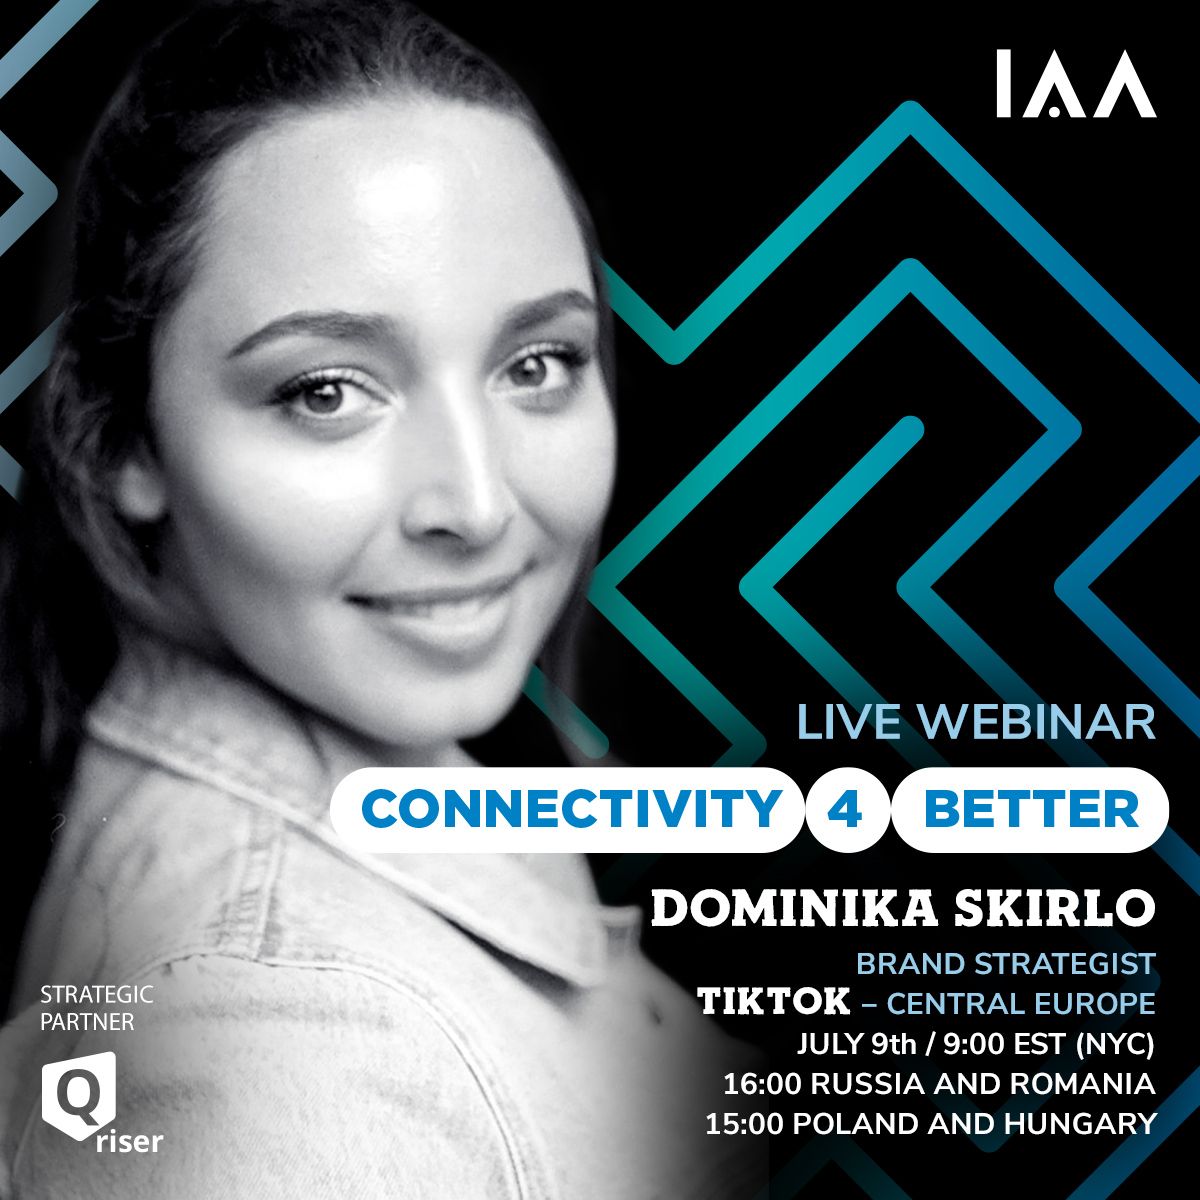 IAA Live Webinar-Brands on TikTok  by Dominika Skirlo